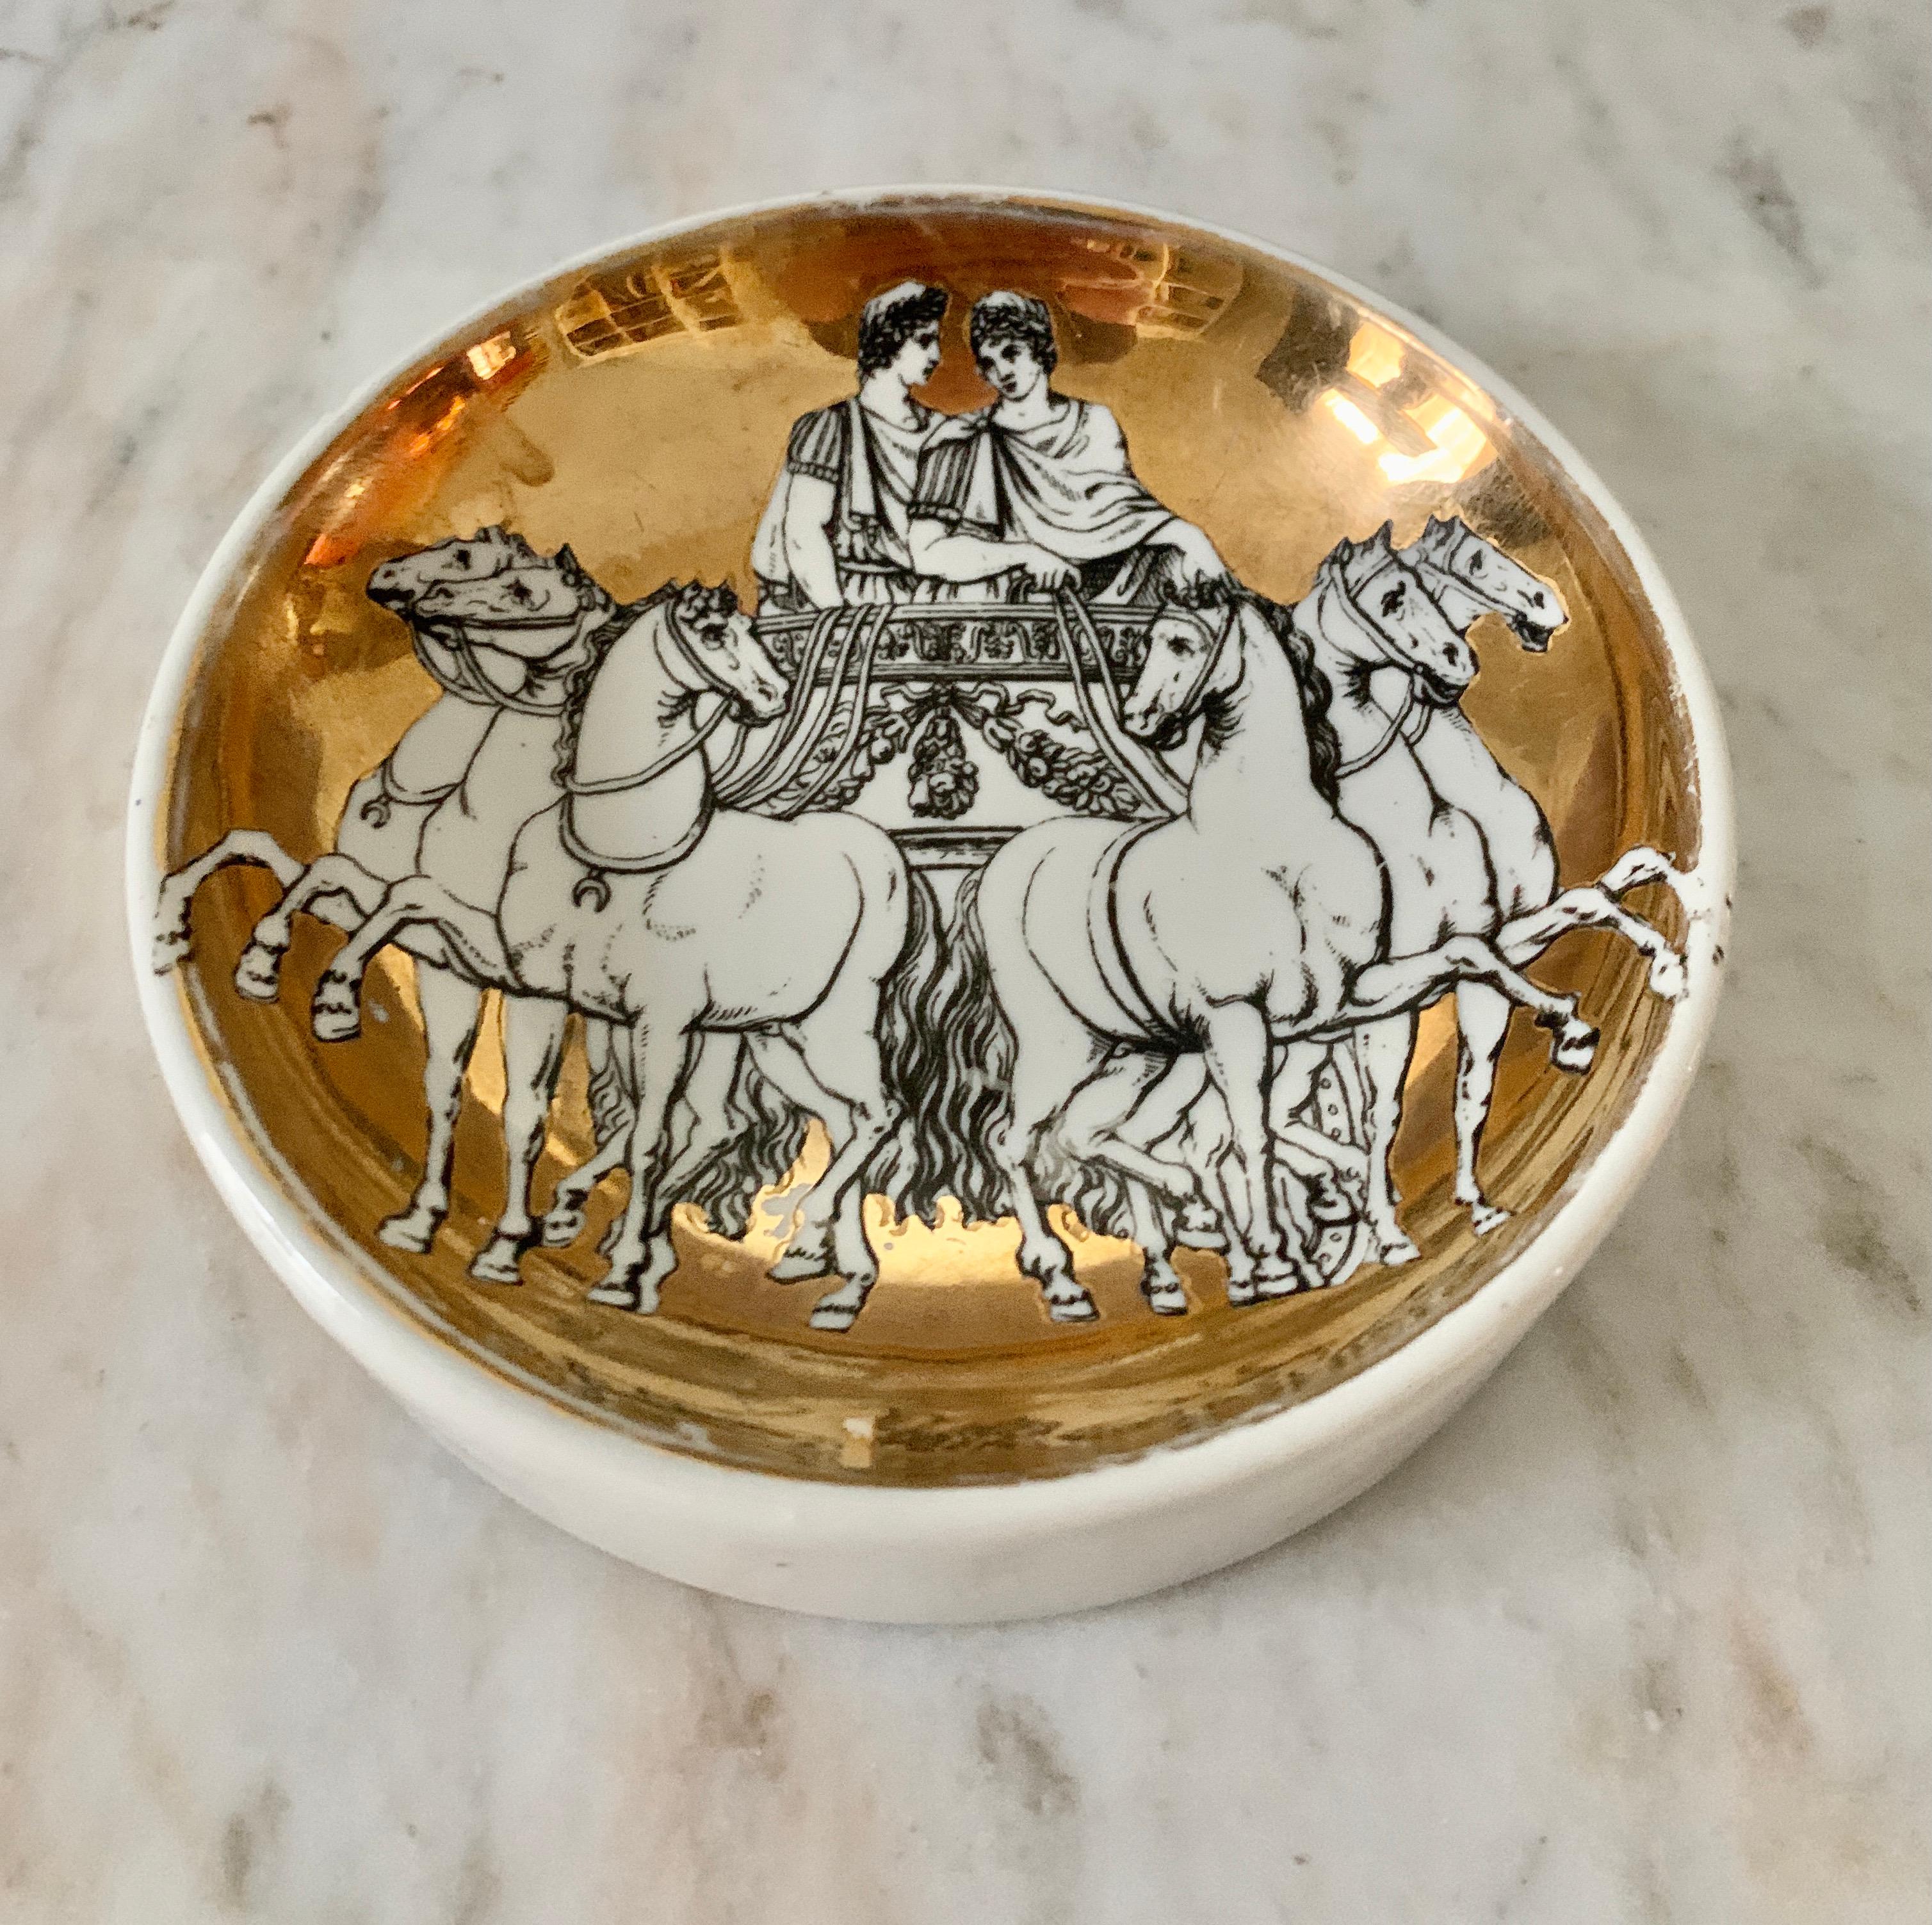 Gilt Round Italian Porcelain and Gold Signed Piero Fornasetti Dish